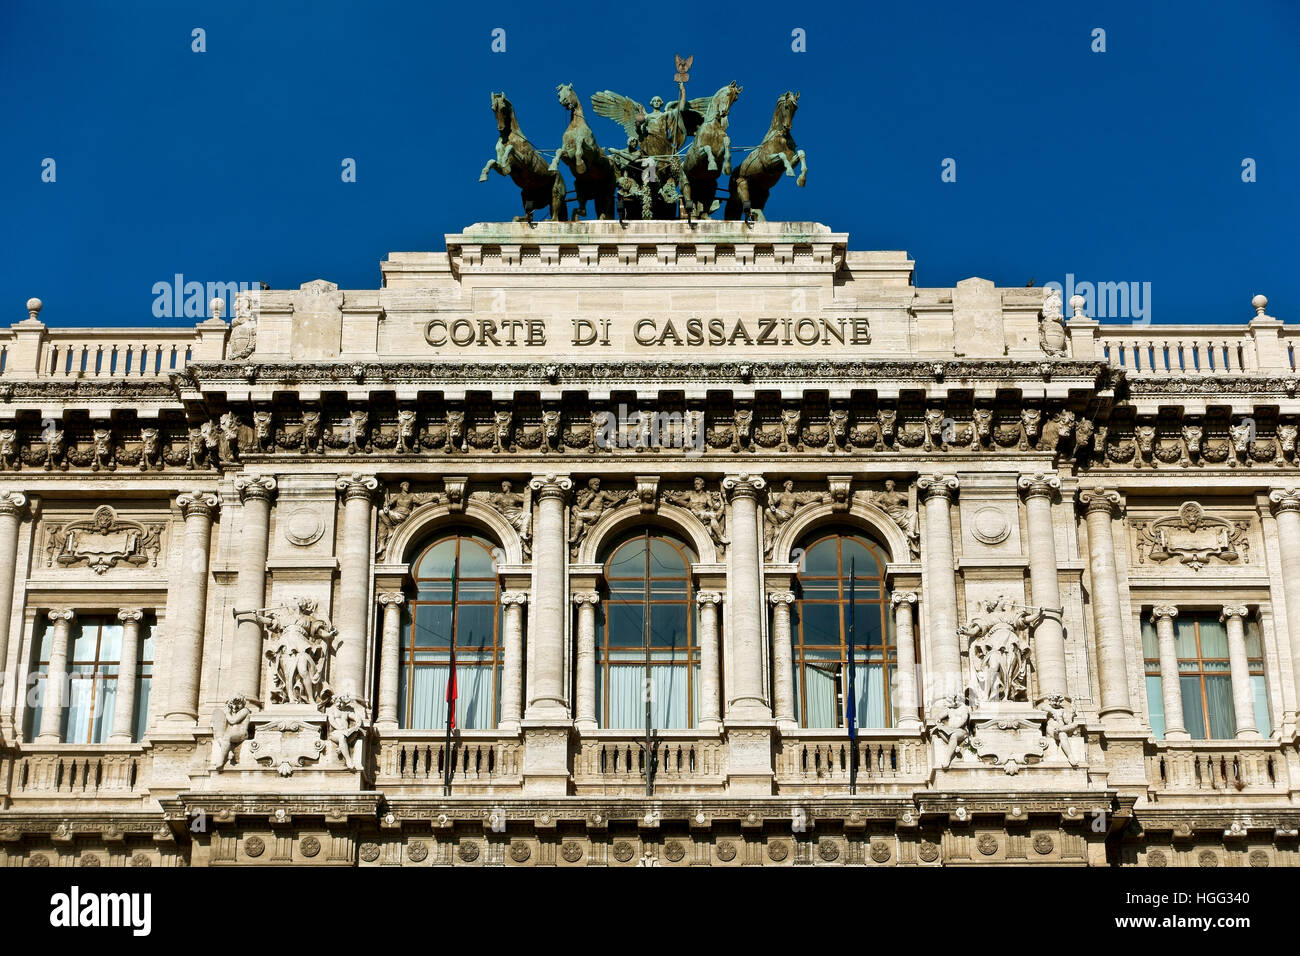 Italian Supreme Court of Cassation (Corte di Cassazione), Palace of Justice, Courthouse. Baroque style, bronze quadriga. Rome, Italy, Europe, EU. Stock Photo